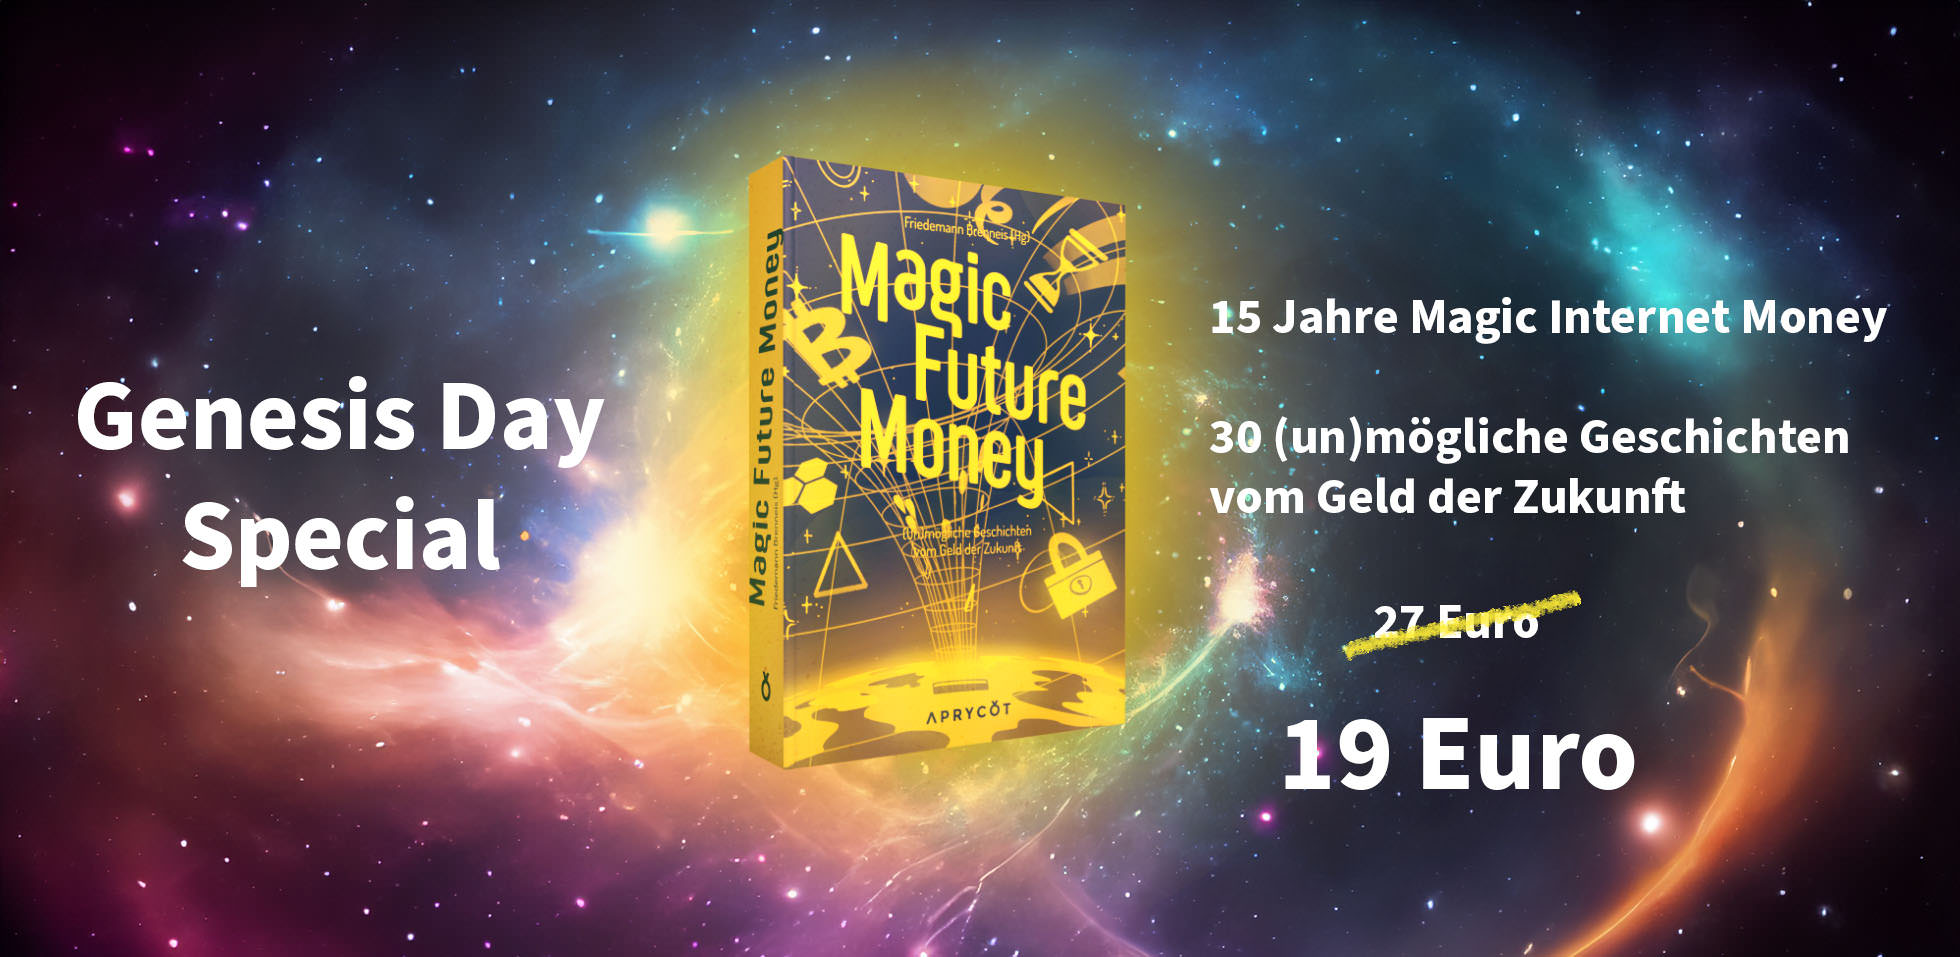 Magic Future Money-Buchaktion mit Sonderpreis 19 statt 27 Euro